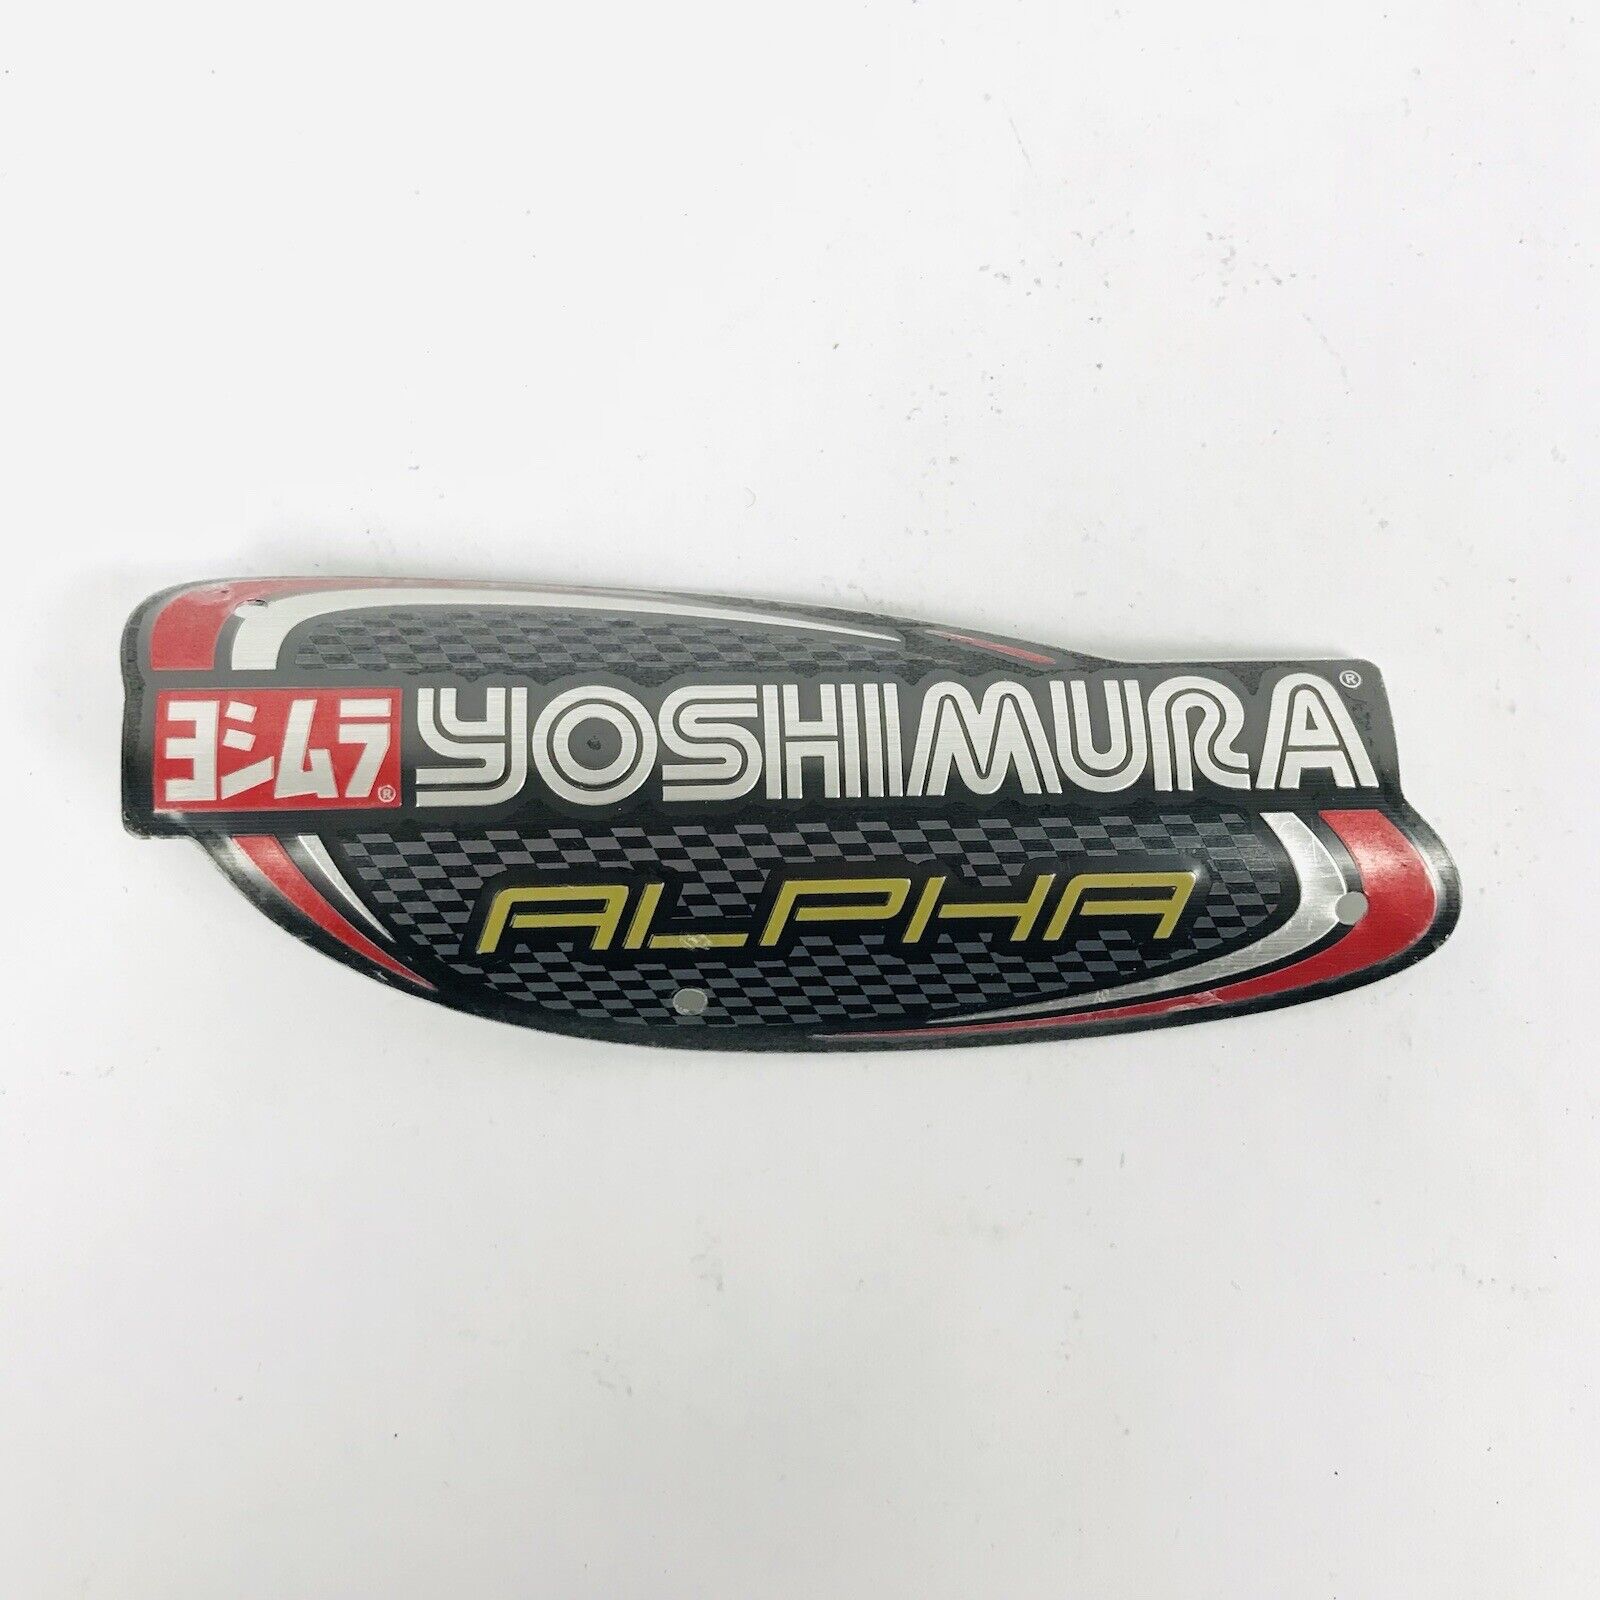 Yoshimura Alpha Exhaust Motorcycle Emblem Name Plate Nameplate